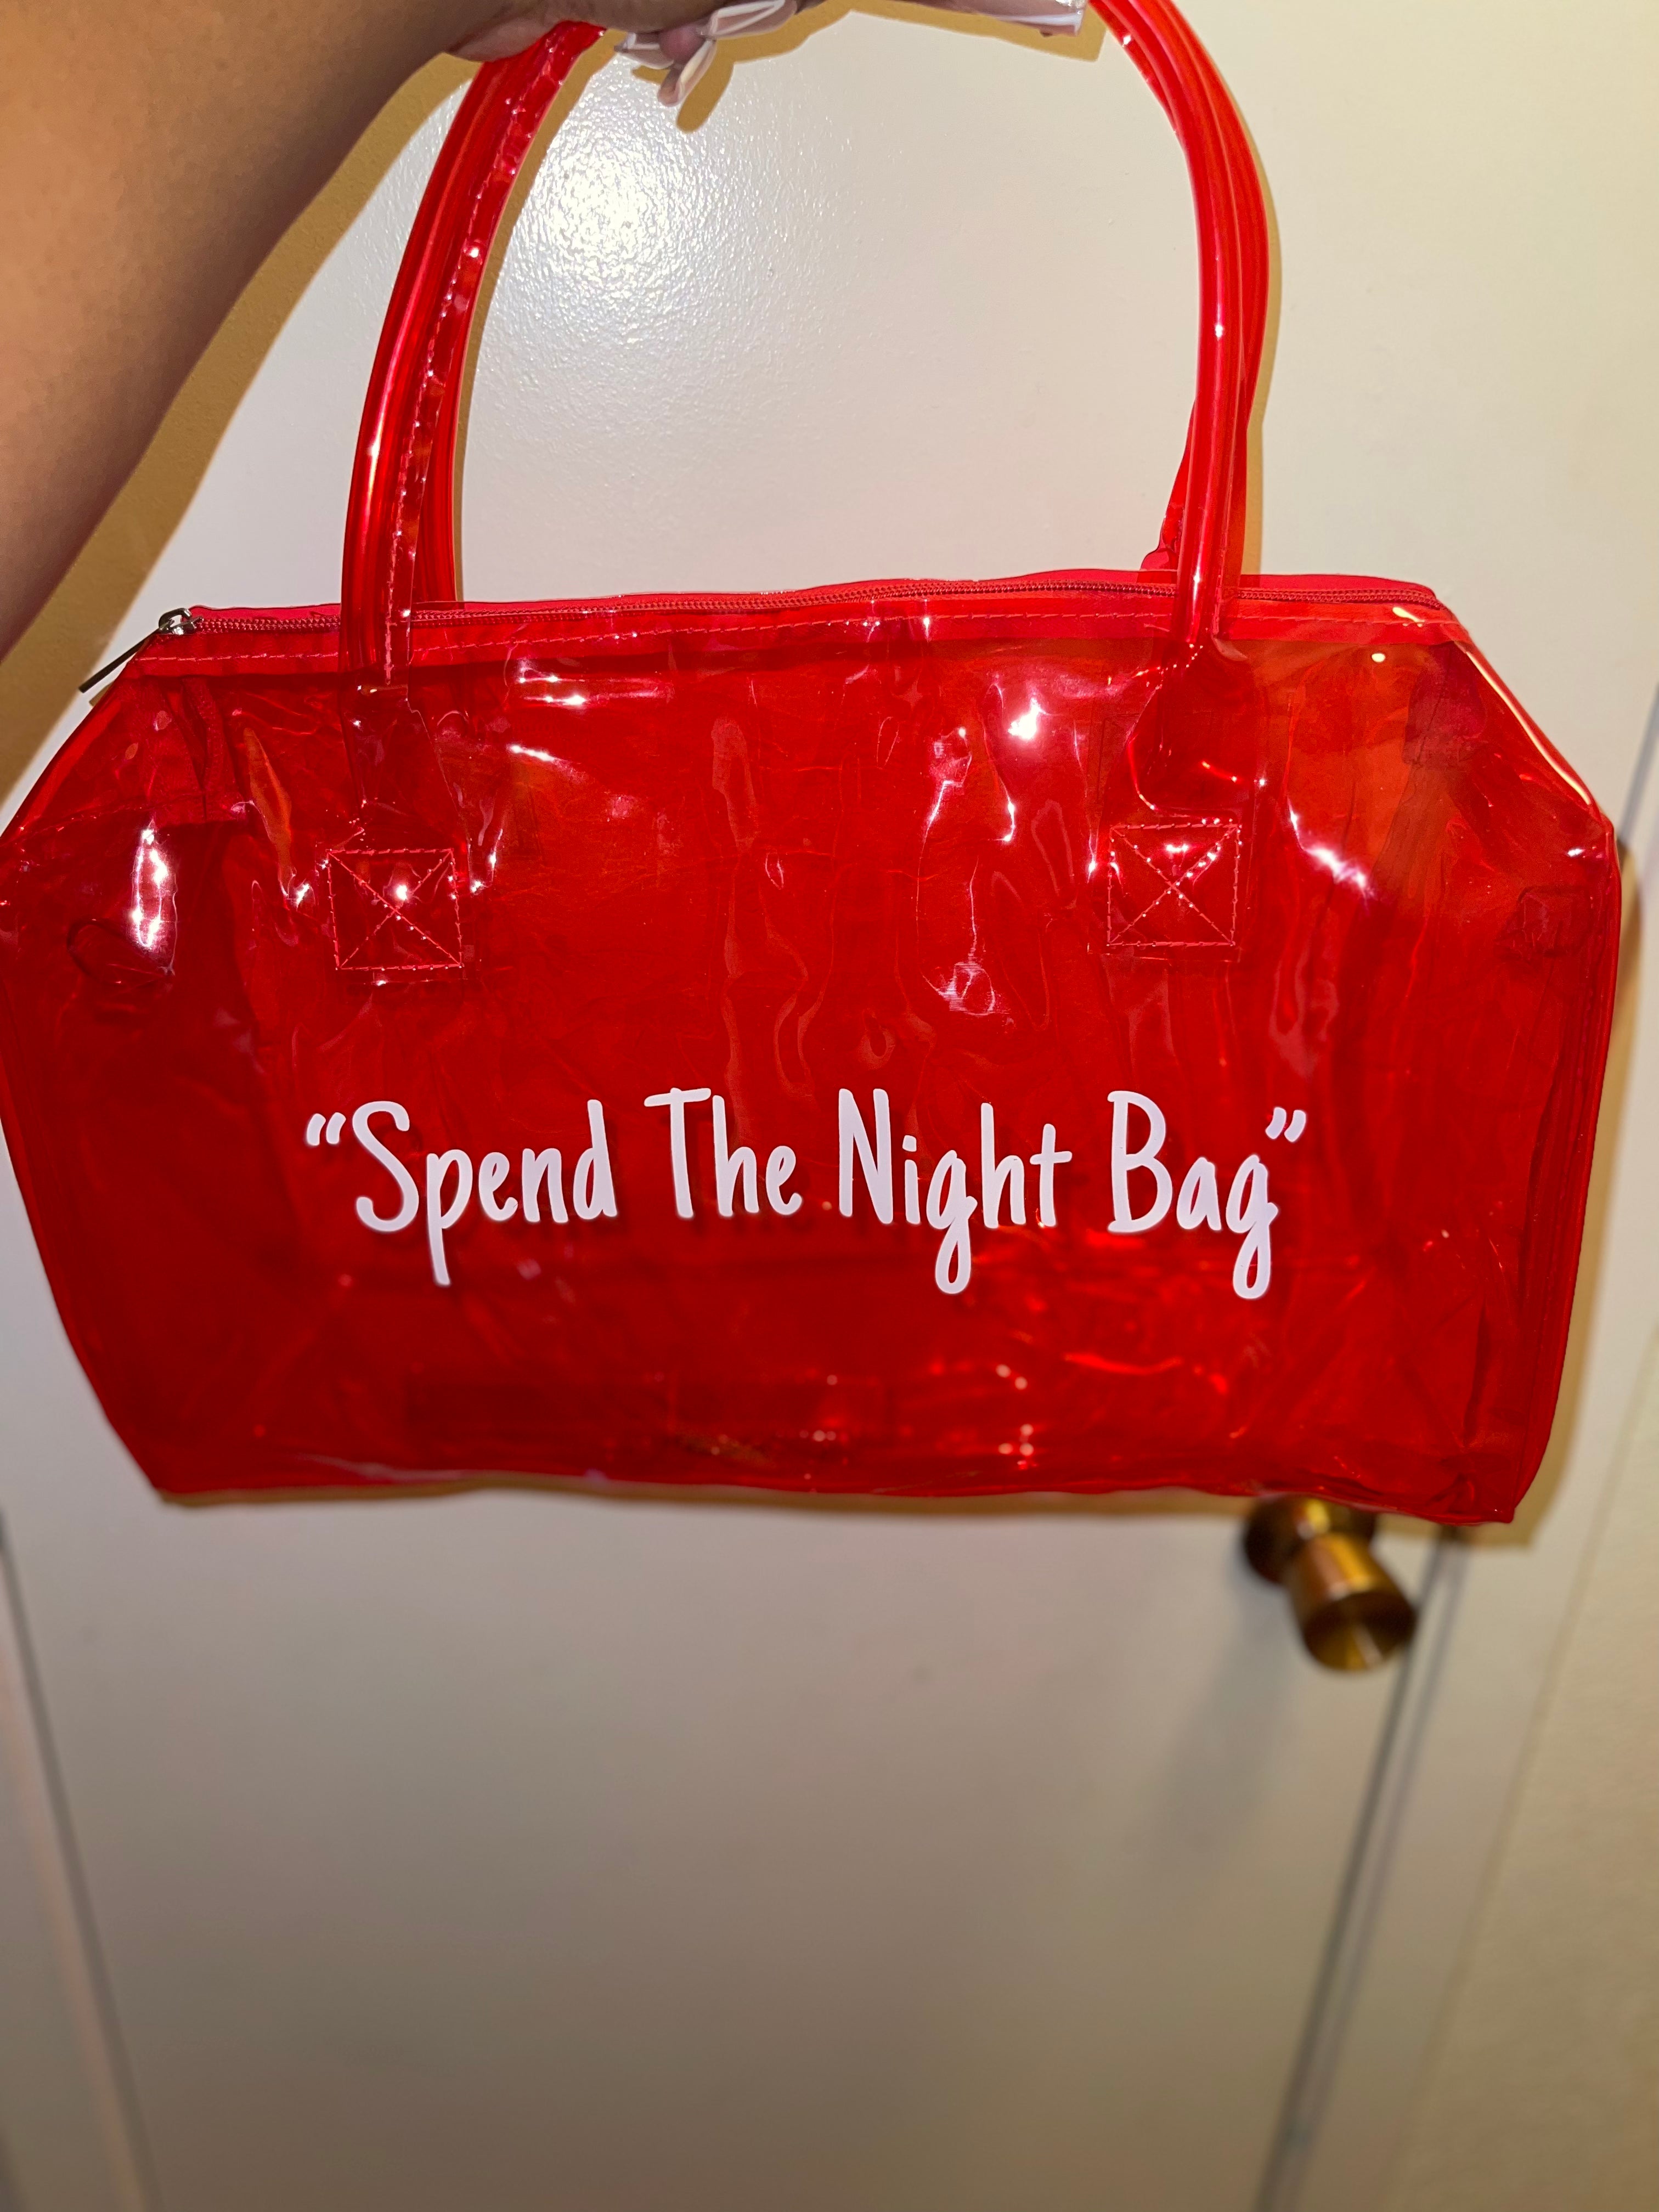 spennanight bag｜TikTok Search